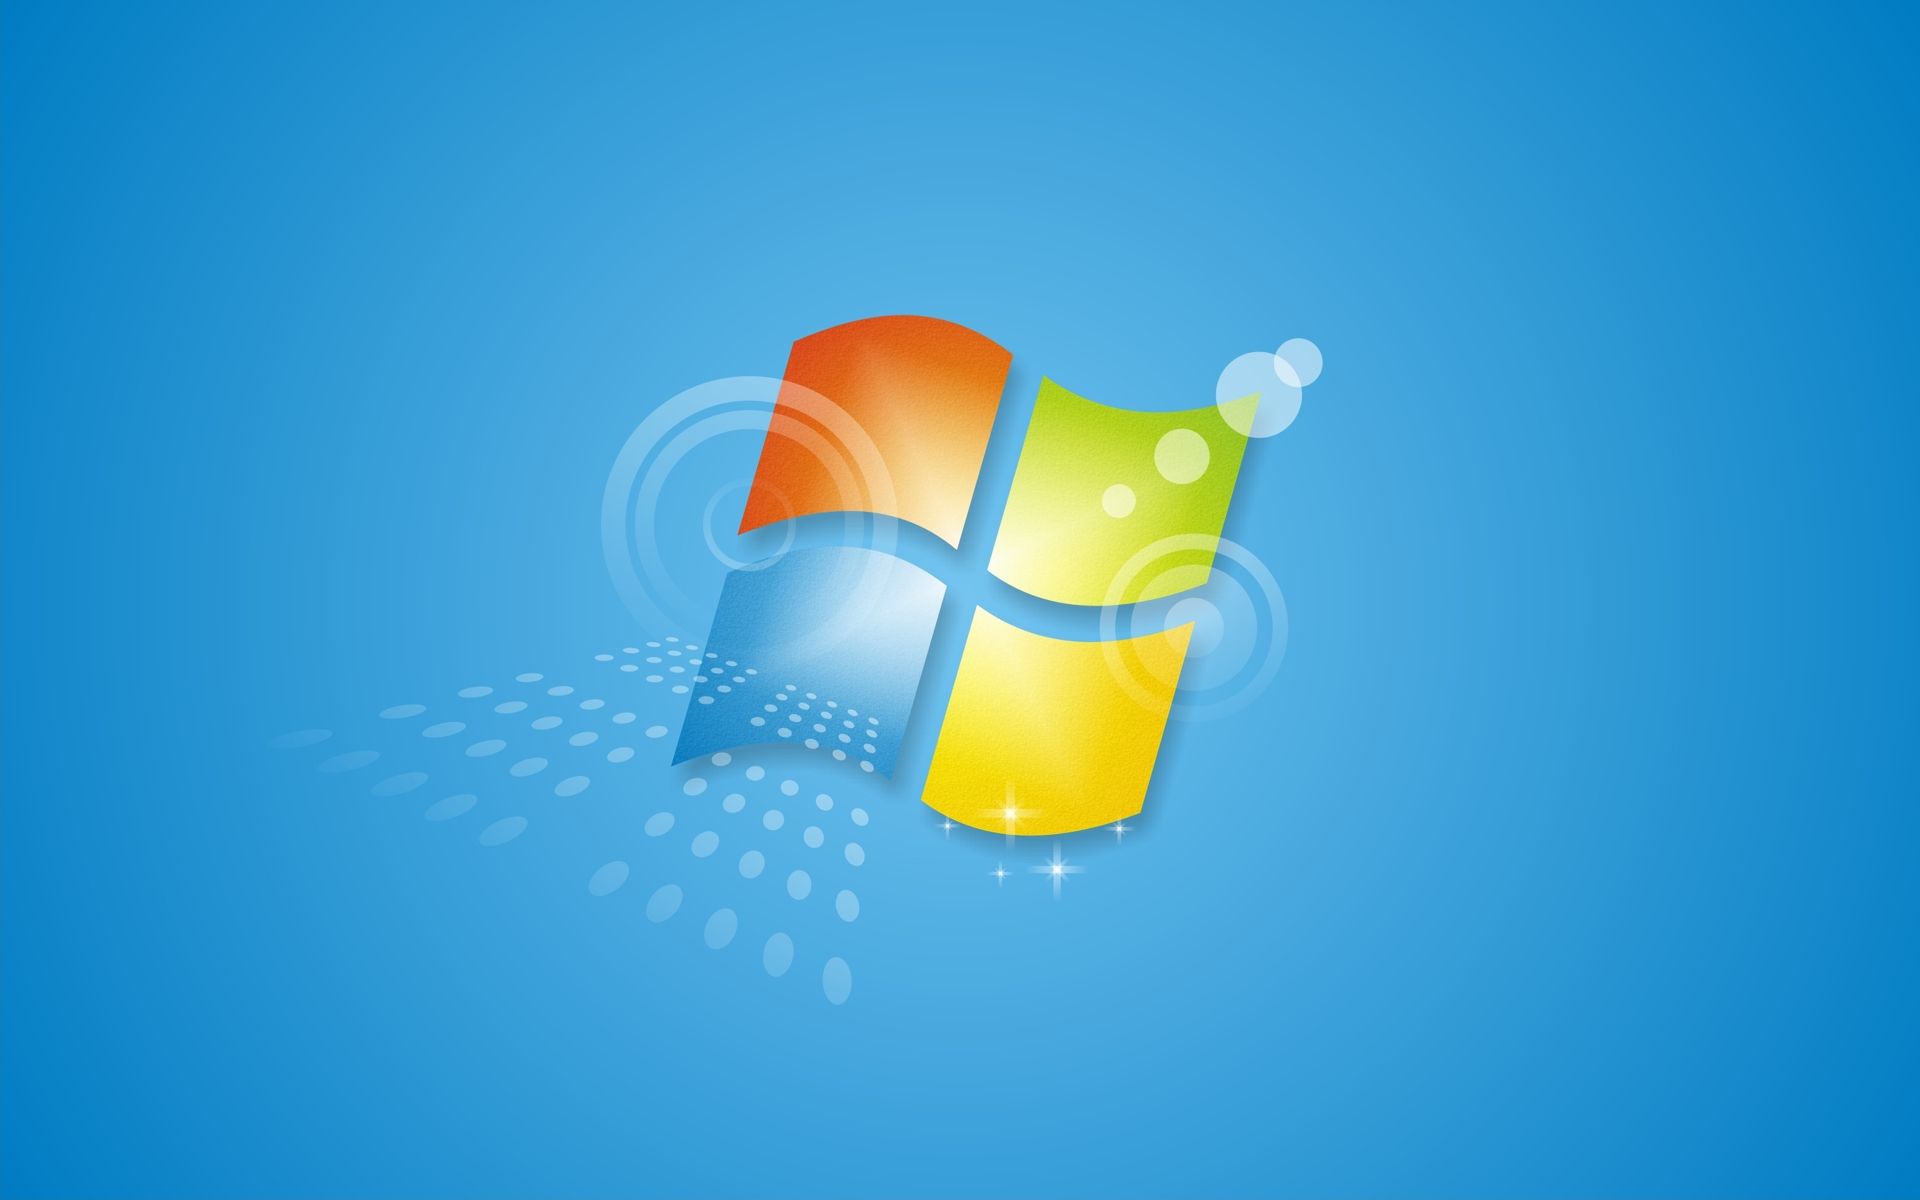 Windows 7 Alternate Blue Wallpaper HD Wallpapers Download